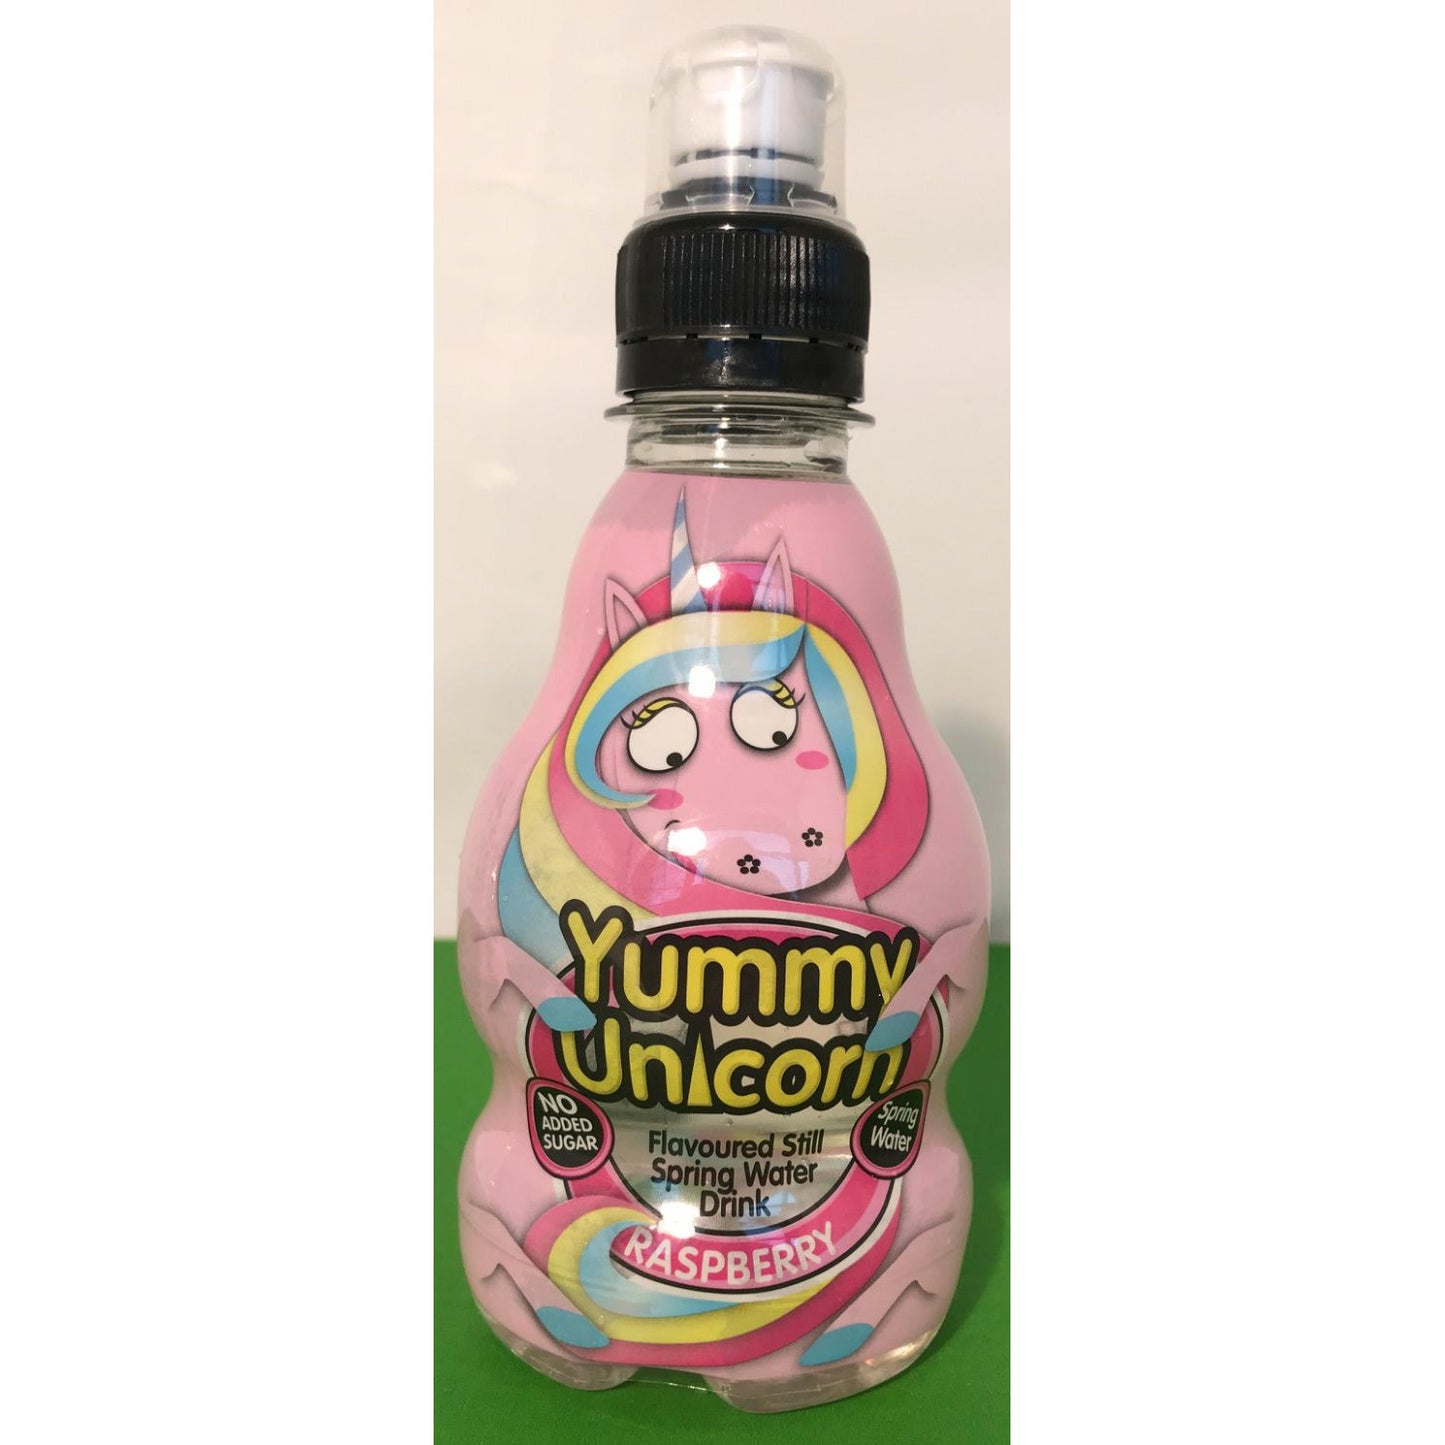 VILLA DRINKS Yummy Unicorn Raspberry Water      Size - 12x270ml